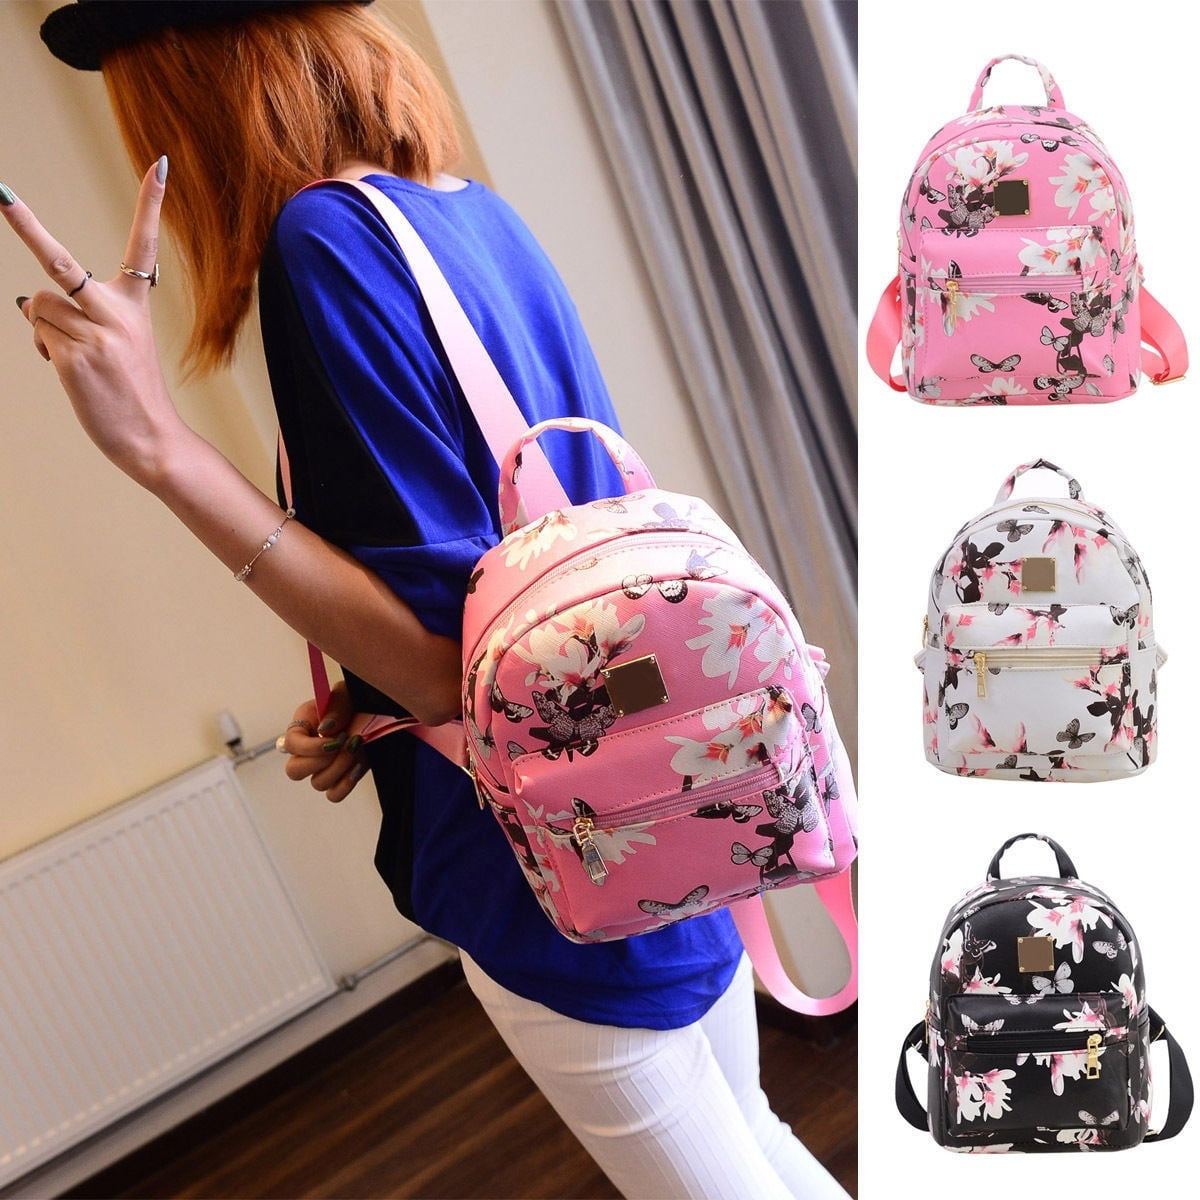 New Women's Backpack Travel Leather Handbag Rucksack Shoulder School Bag 